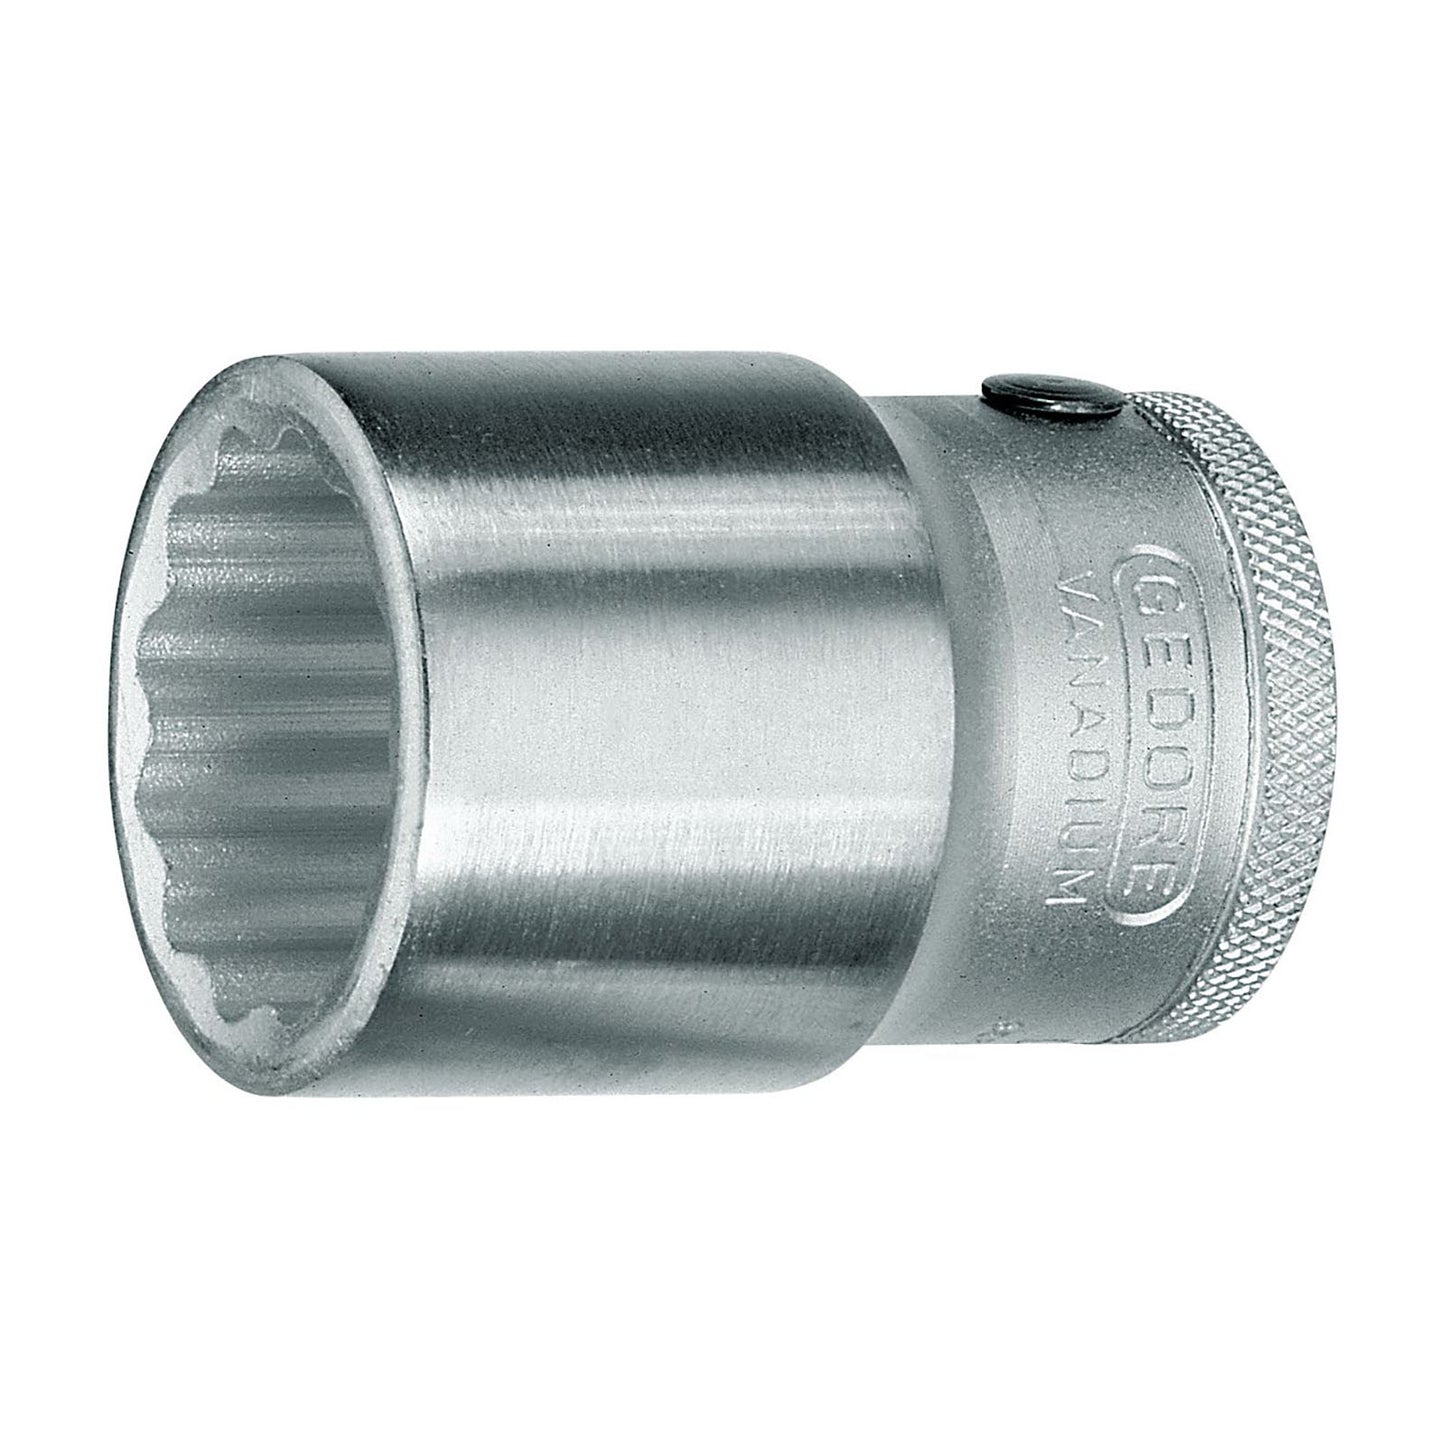 GEDORE D 32 21 - Unit Drive Socket 3/4", 21 mm (6289800)